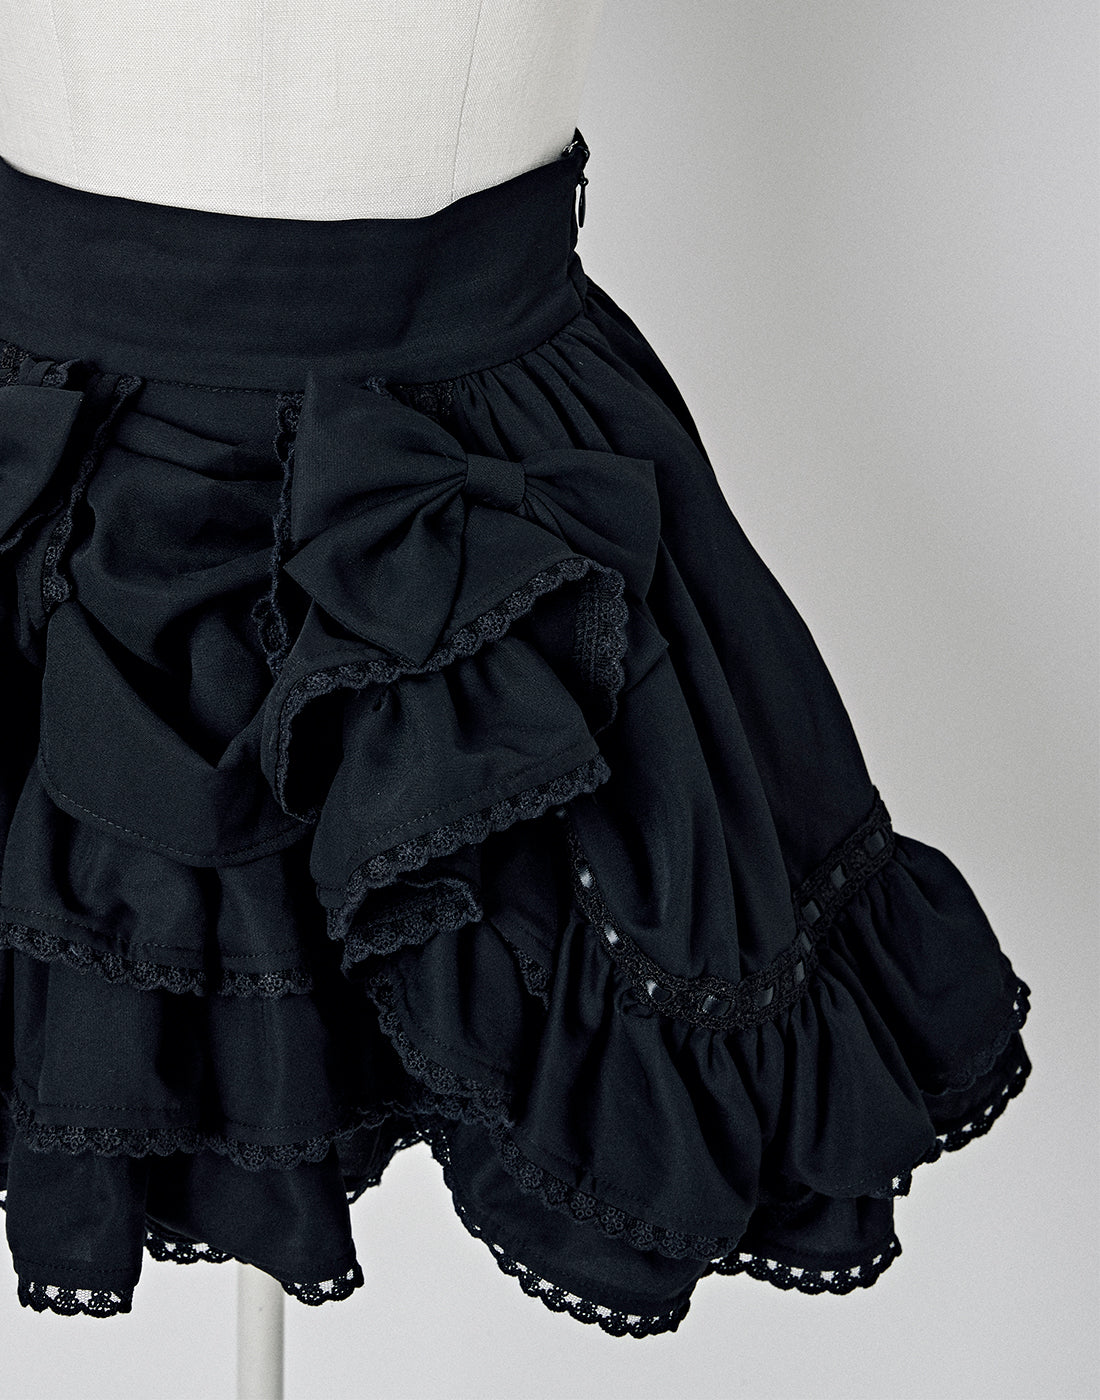 Fern Doll Skirt - Violette Field Threads